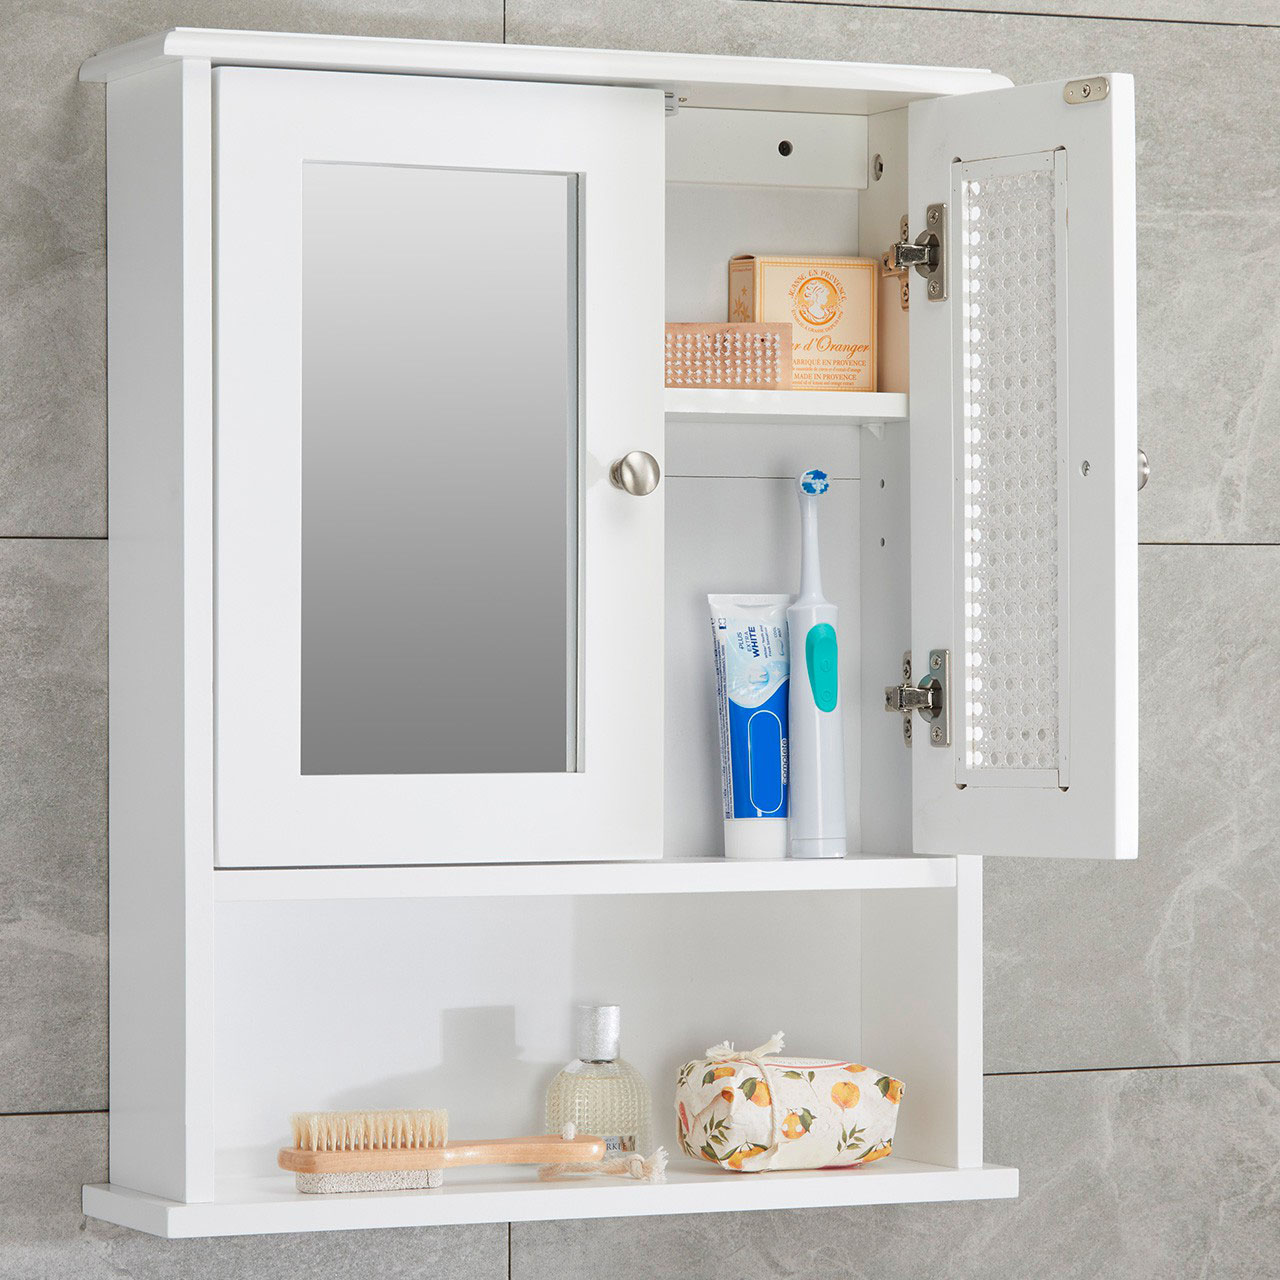 Hanley Mirrored Bathroom Wall Cabinet